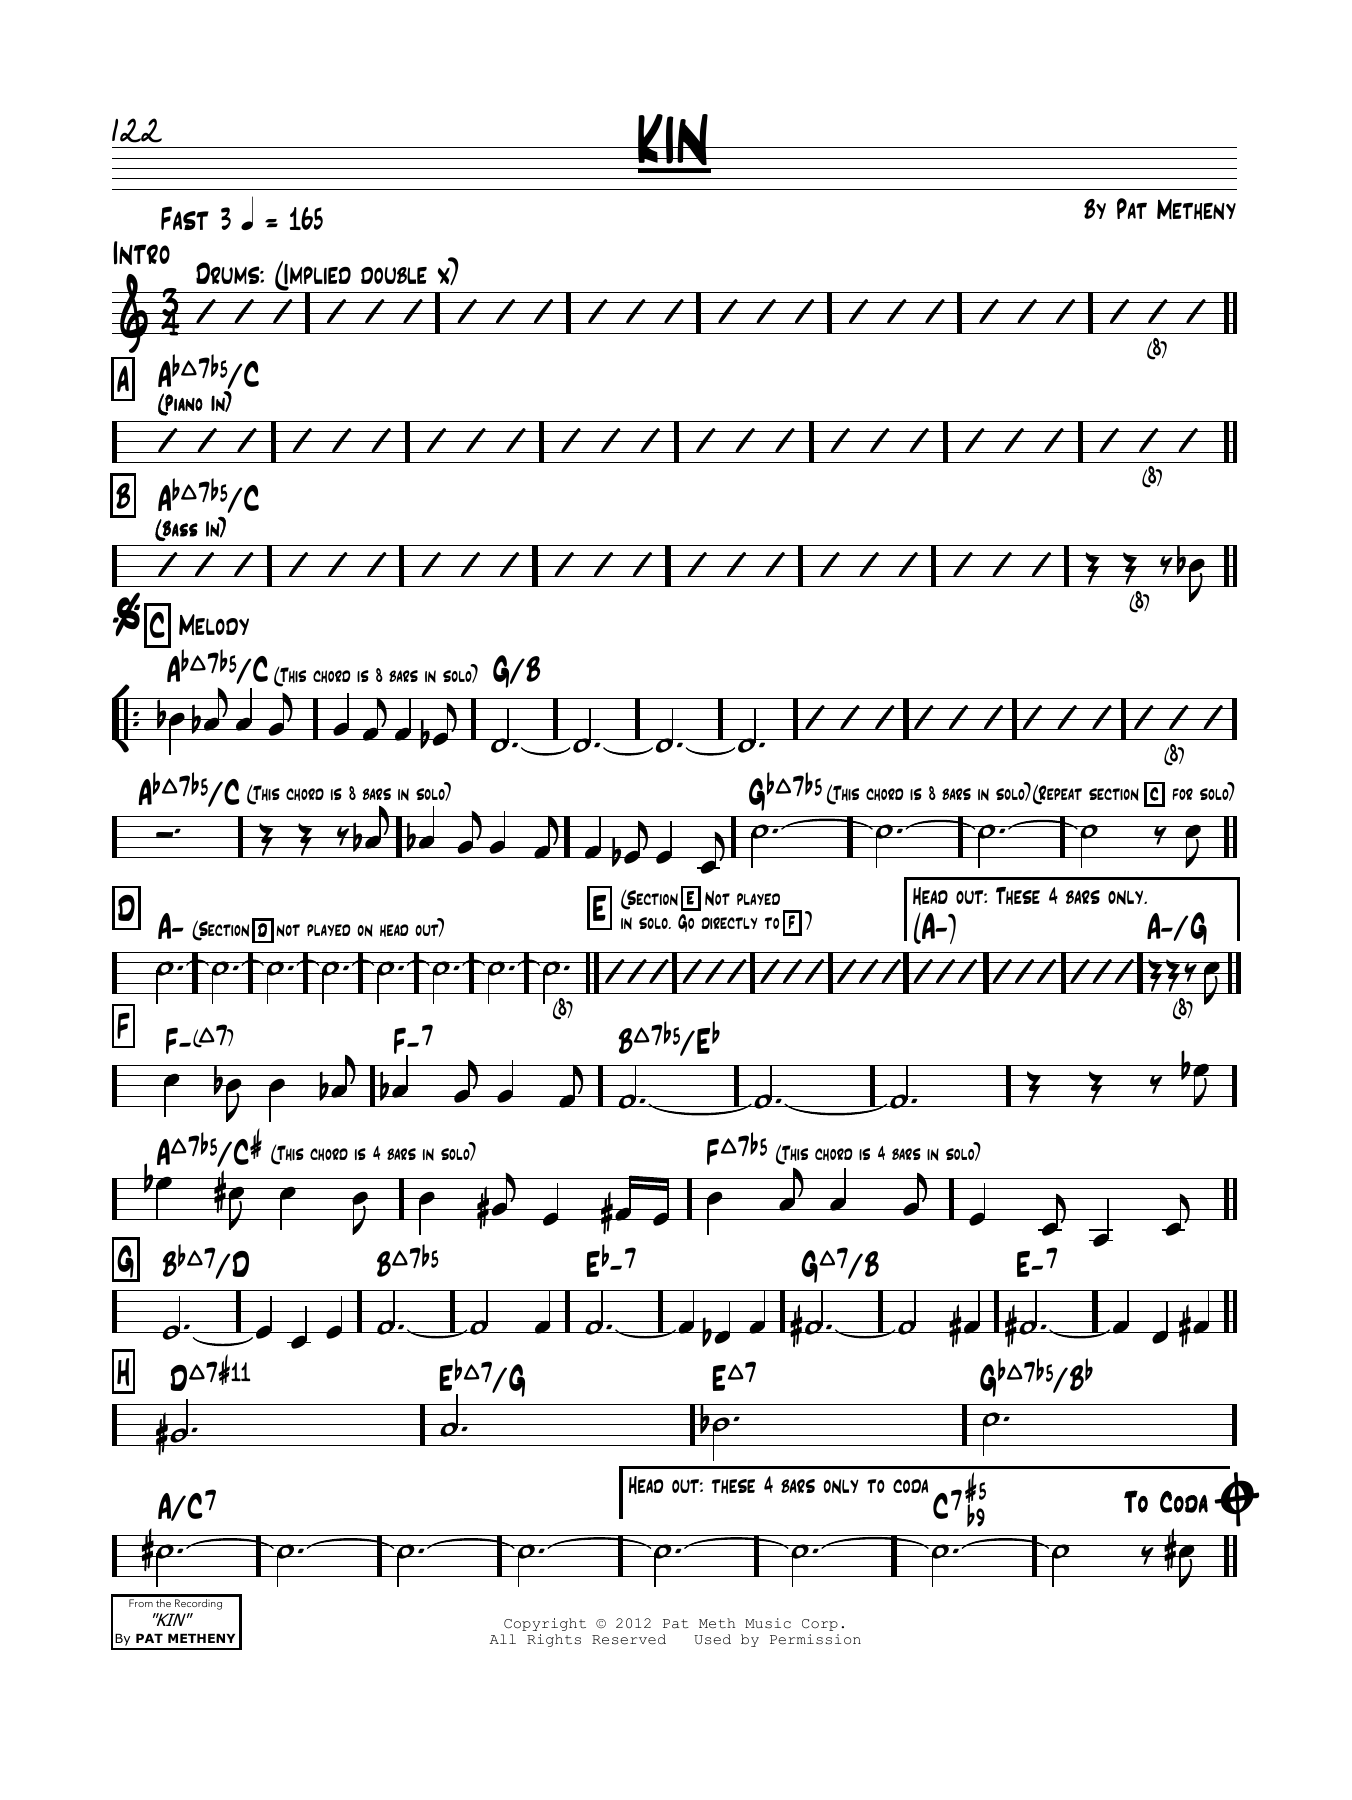 Pat Metheny Kin Sheet Music Notes & Chords for Real Book – Melody & Chords - Download or Print PDF